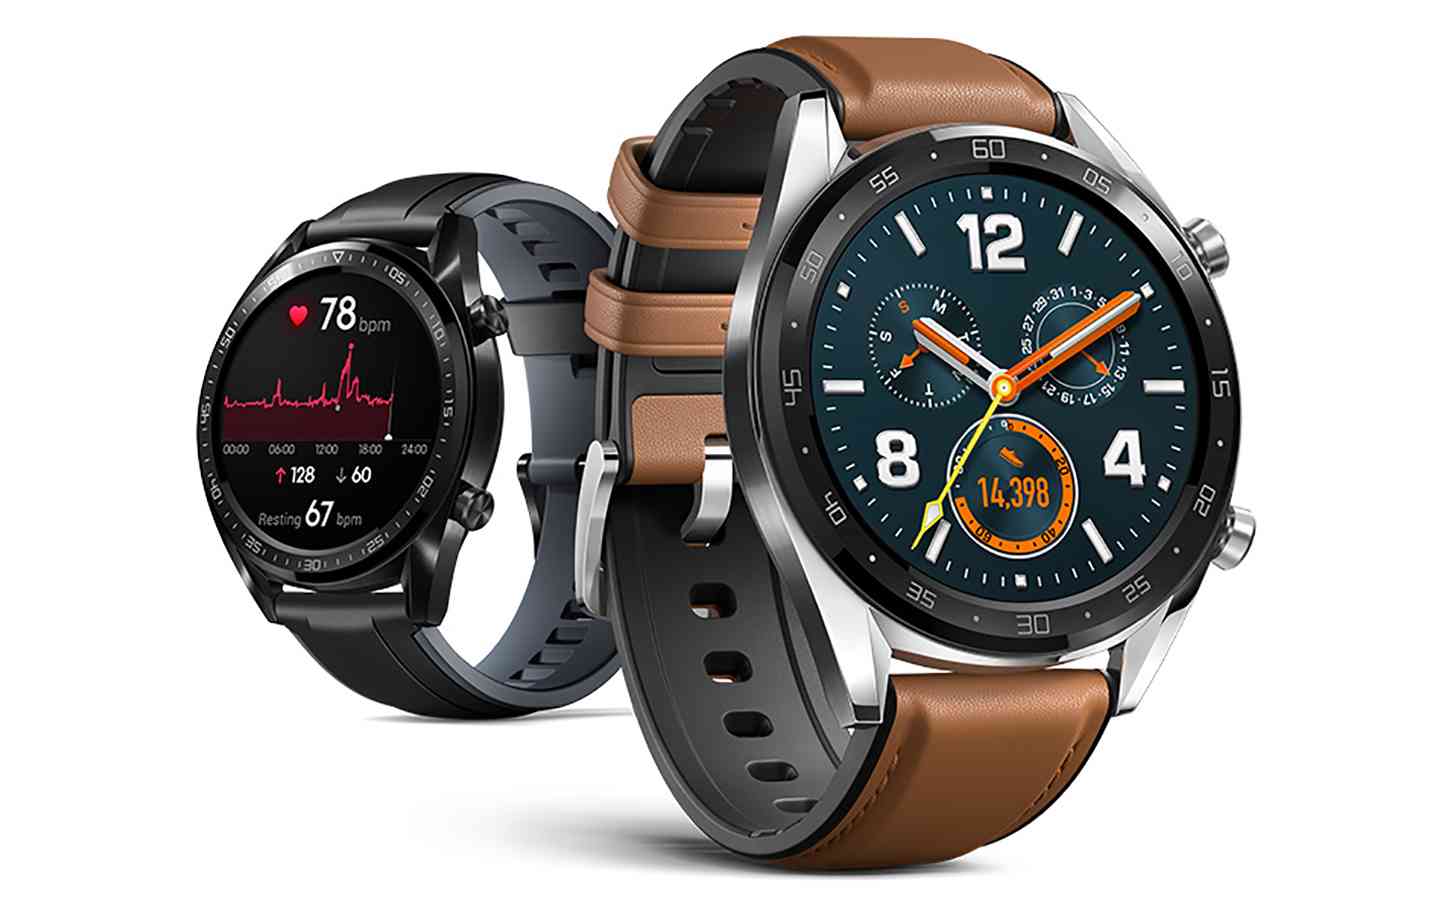 Huawei Watch GT smartwatch official